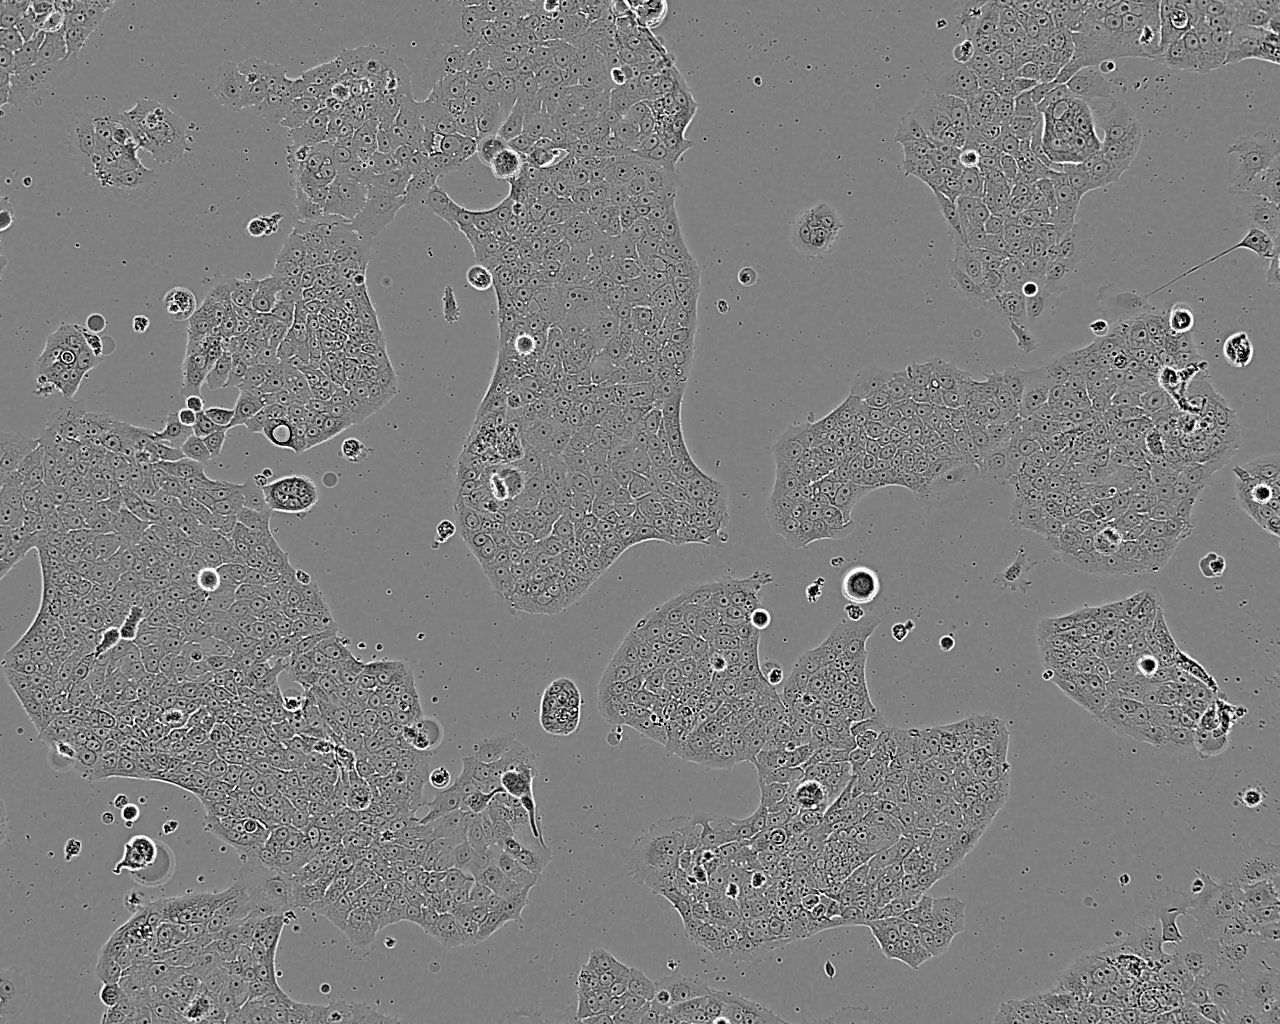 SNU-C2A epithelioid cells人结肠癌细胞系,SNU-C2A epithelioid cells